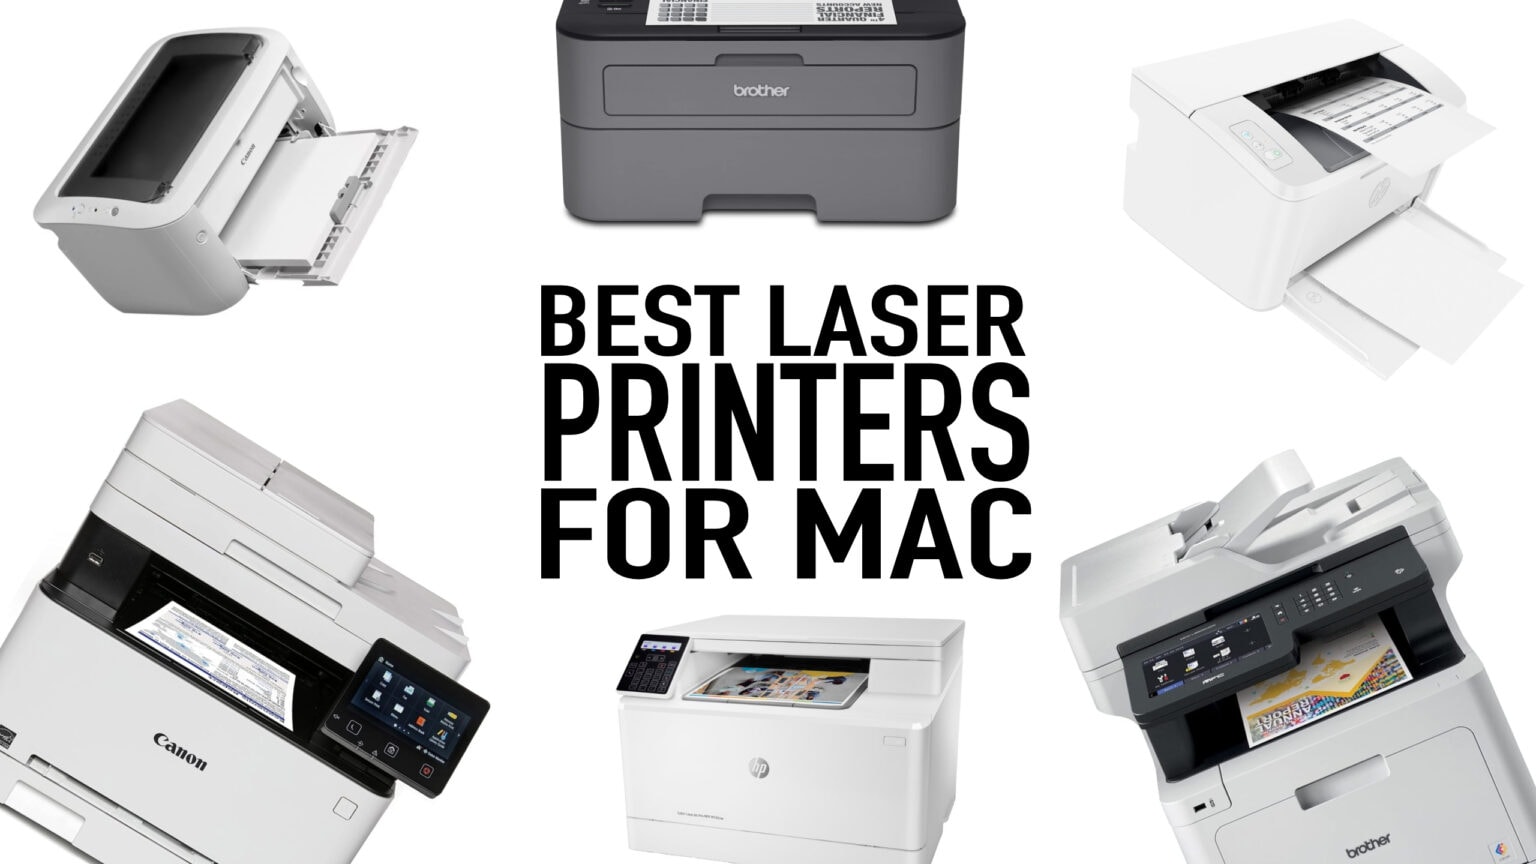 Best laser printer for Mac